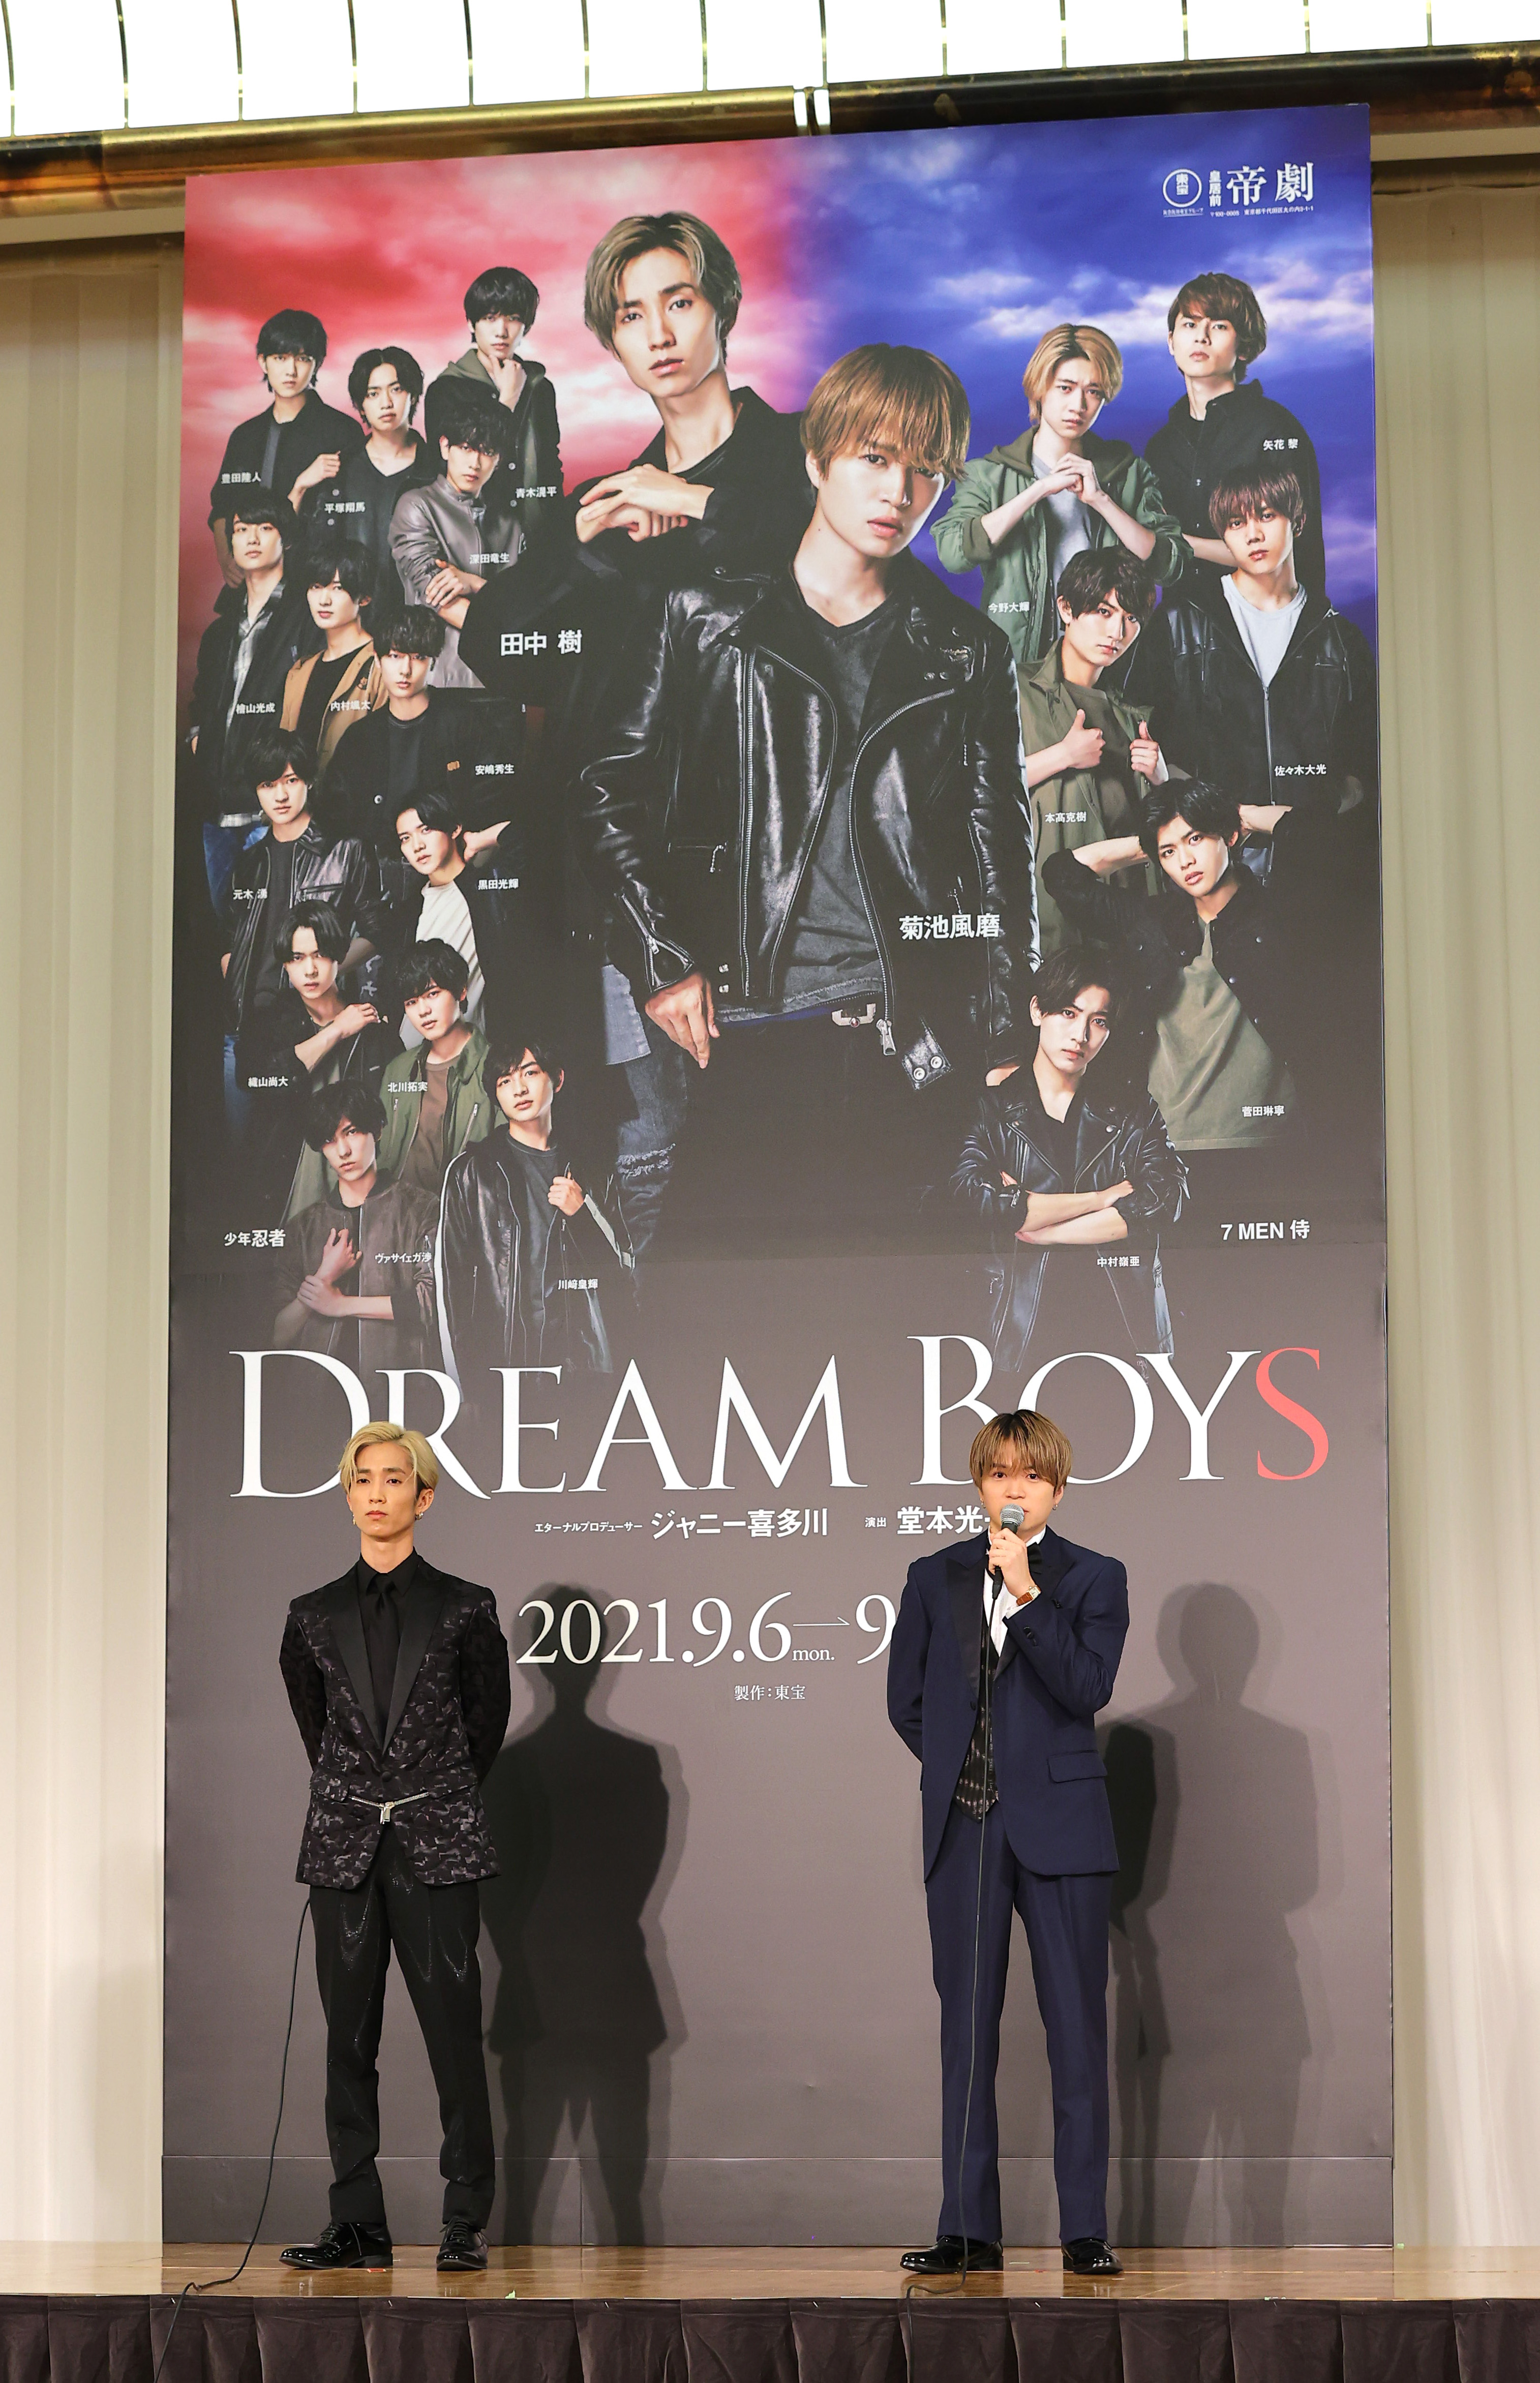 DREAMBOYS 2021 DVD 菊池風磨 田中樹